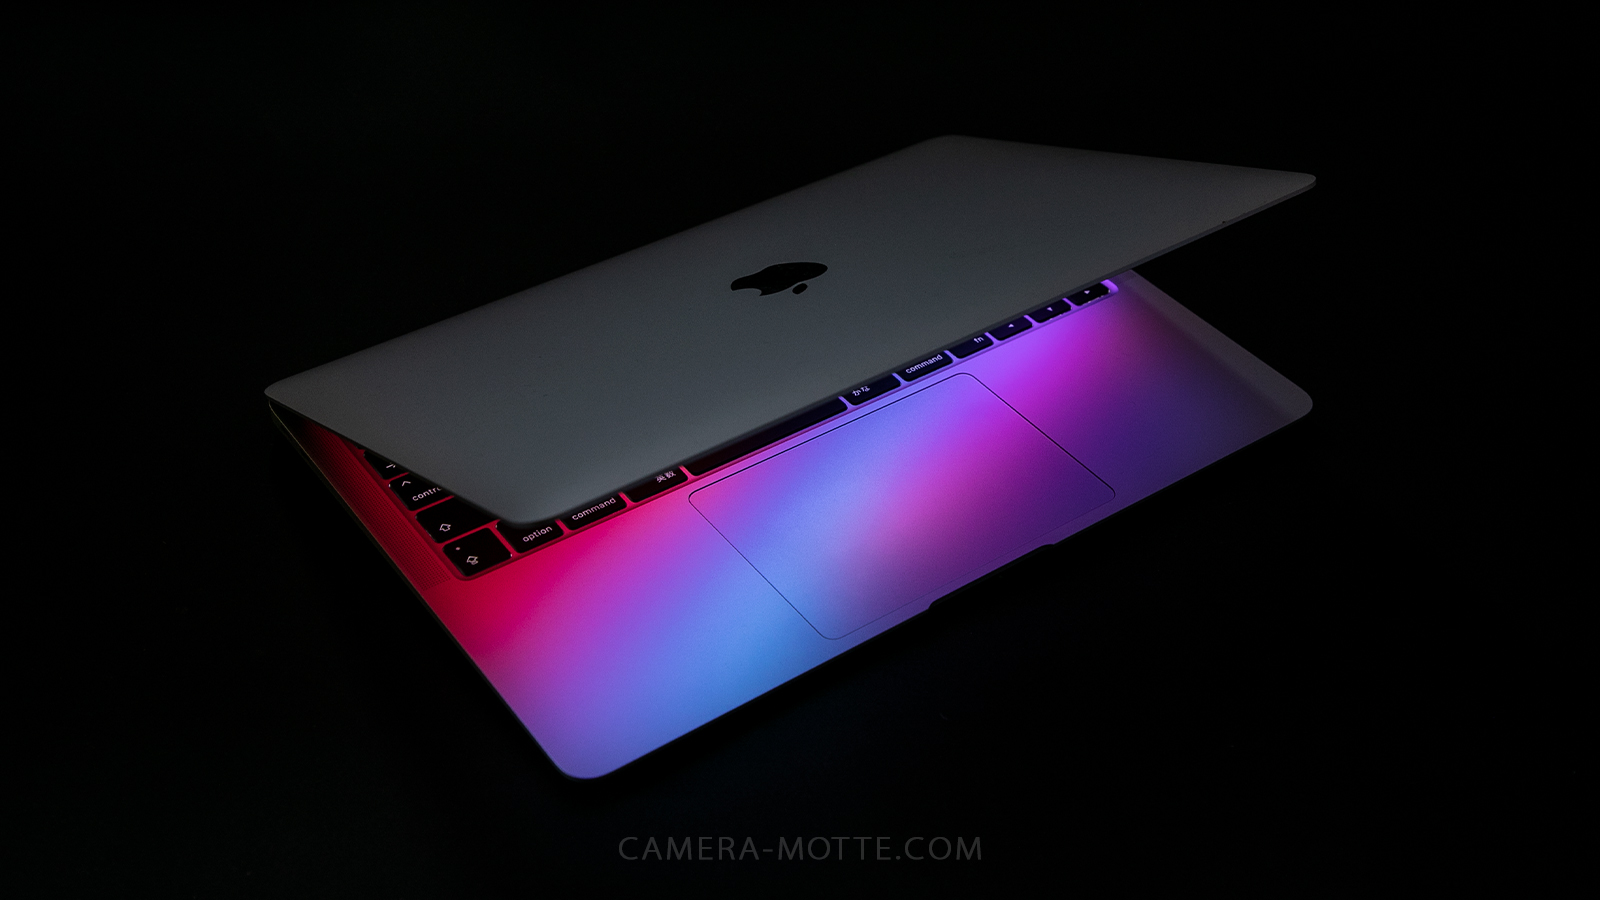 Apple MacBook Air(M1,2020)CAMERA MOTTE